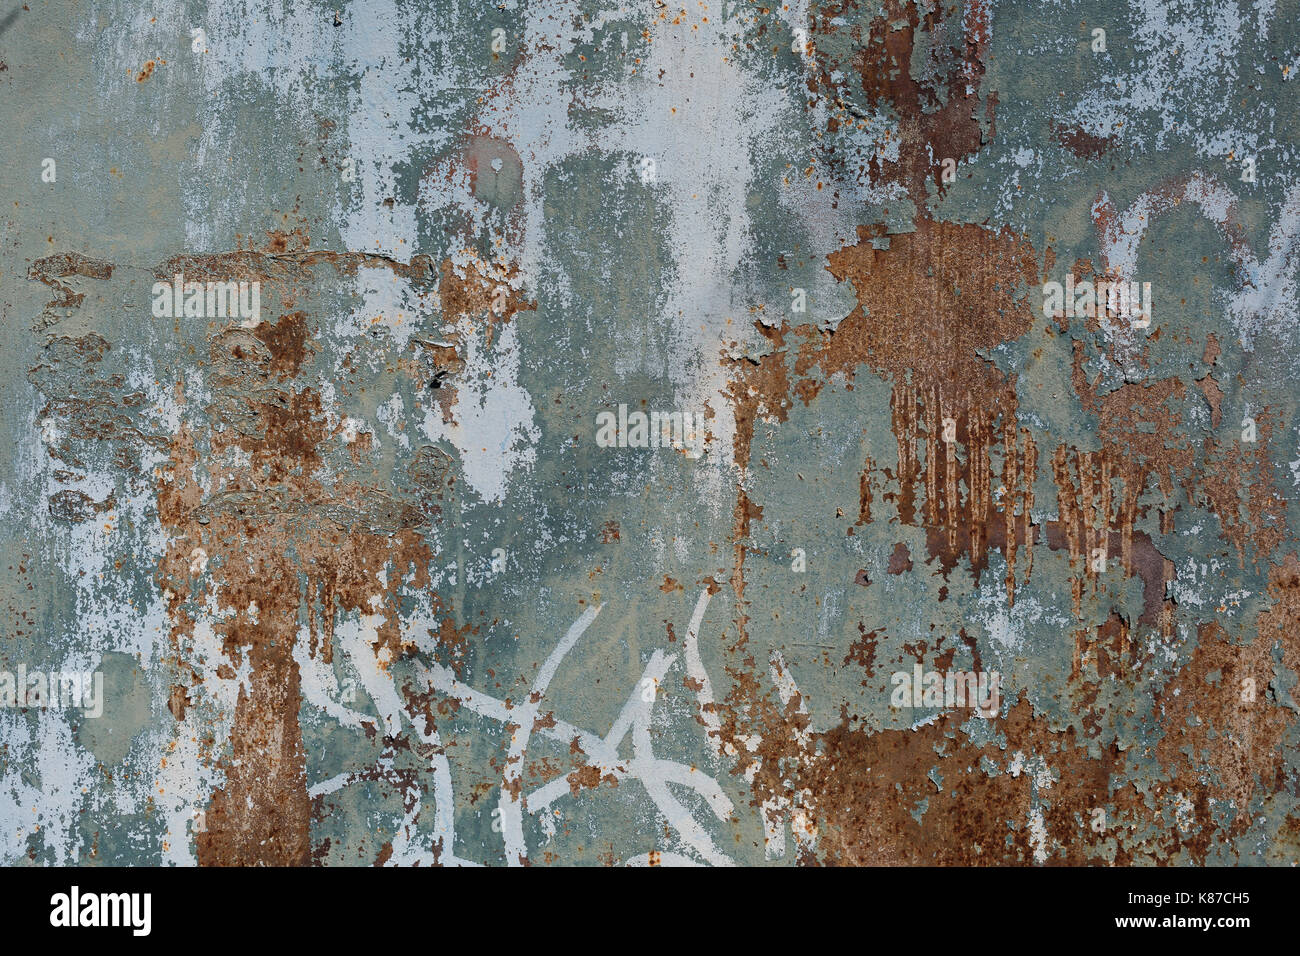 Rusty metal surface avec de la peinture bleu Banque D'Images